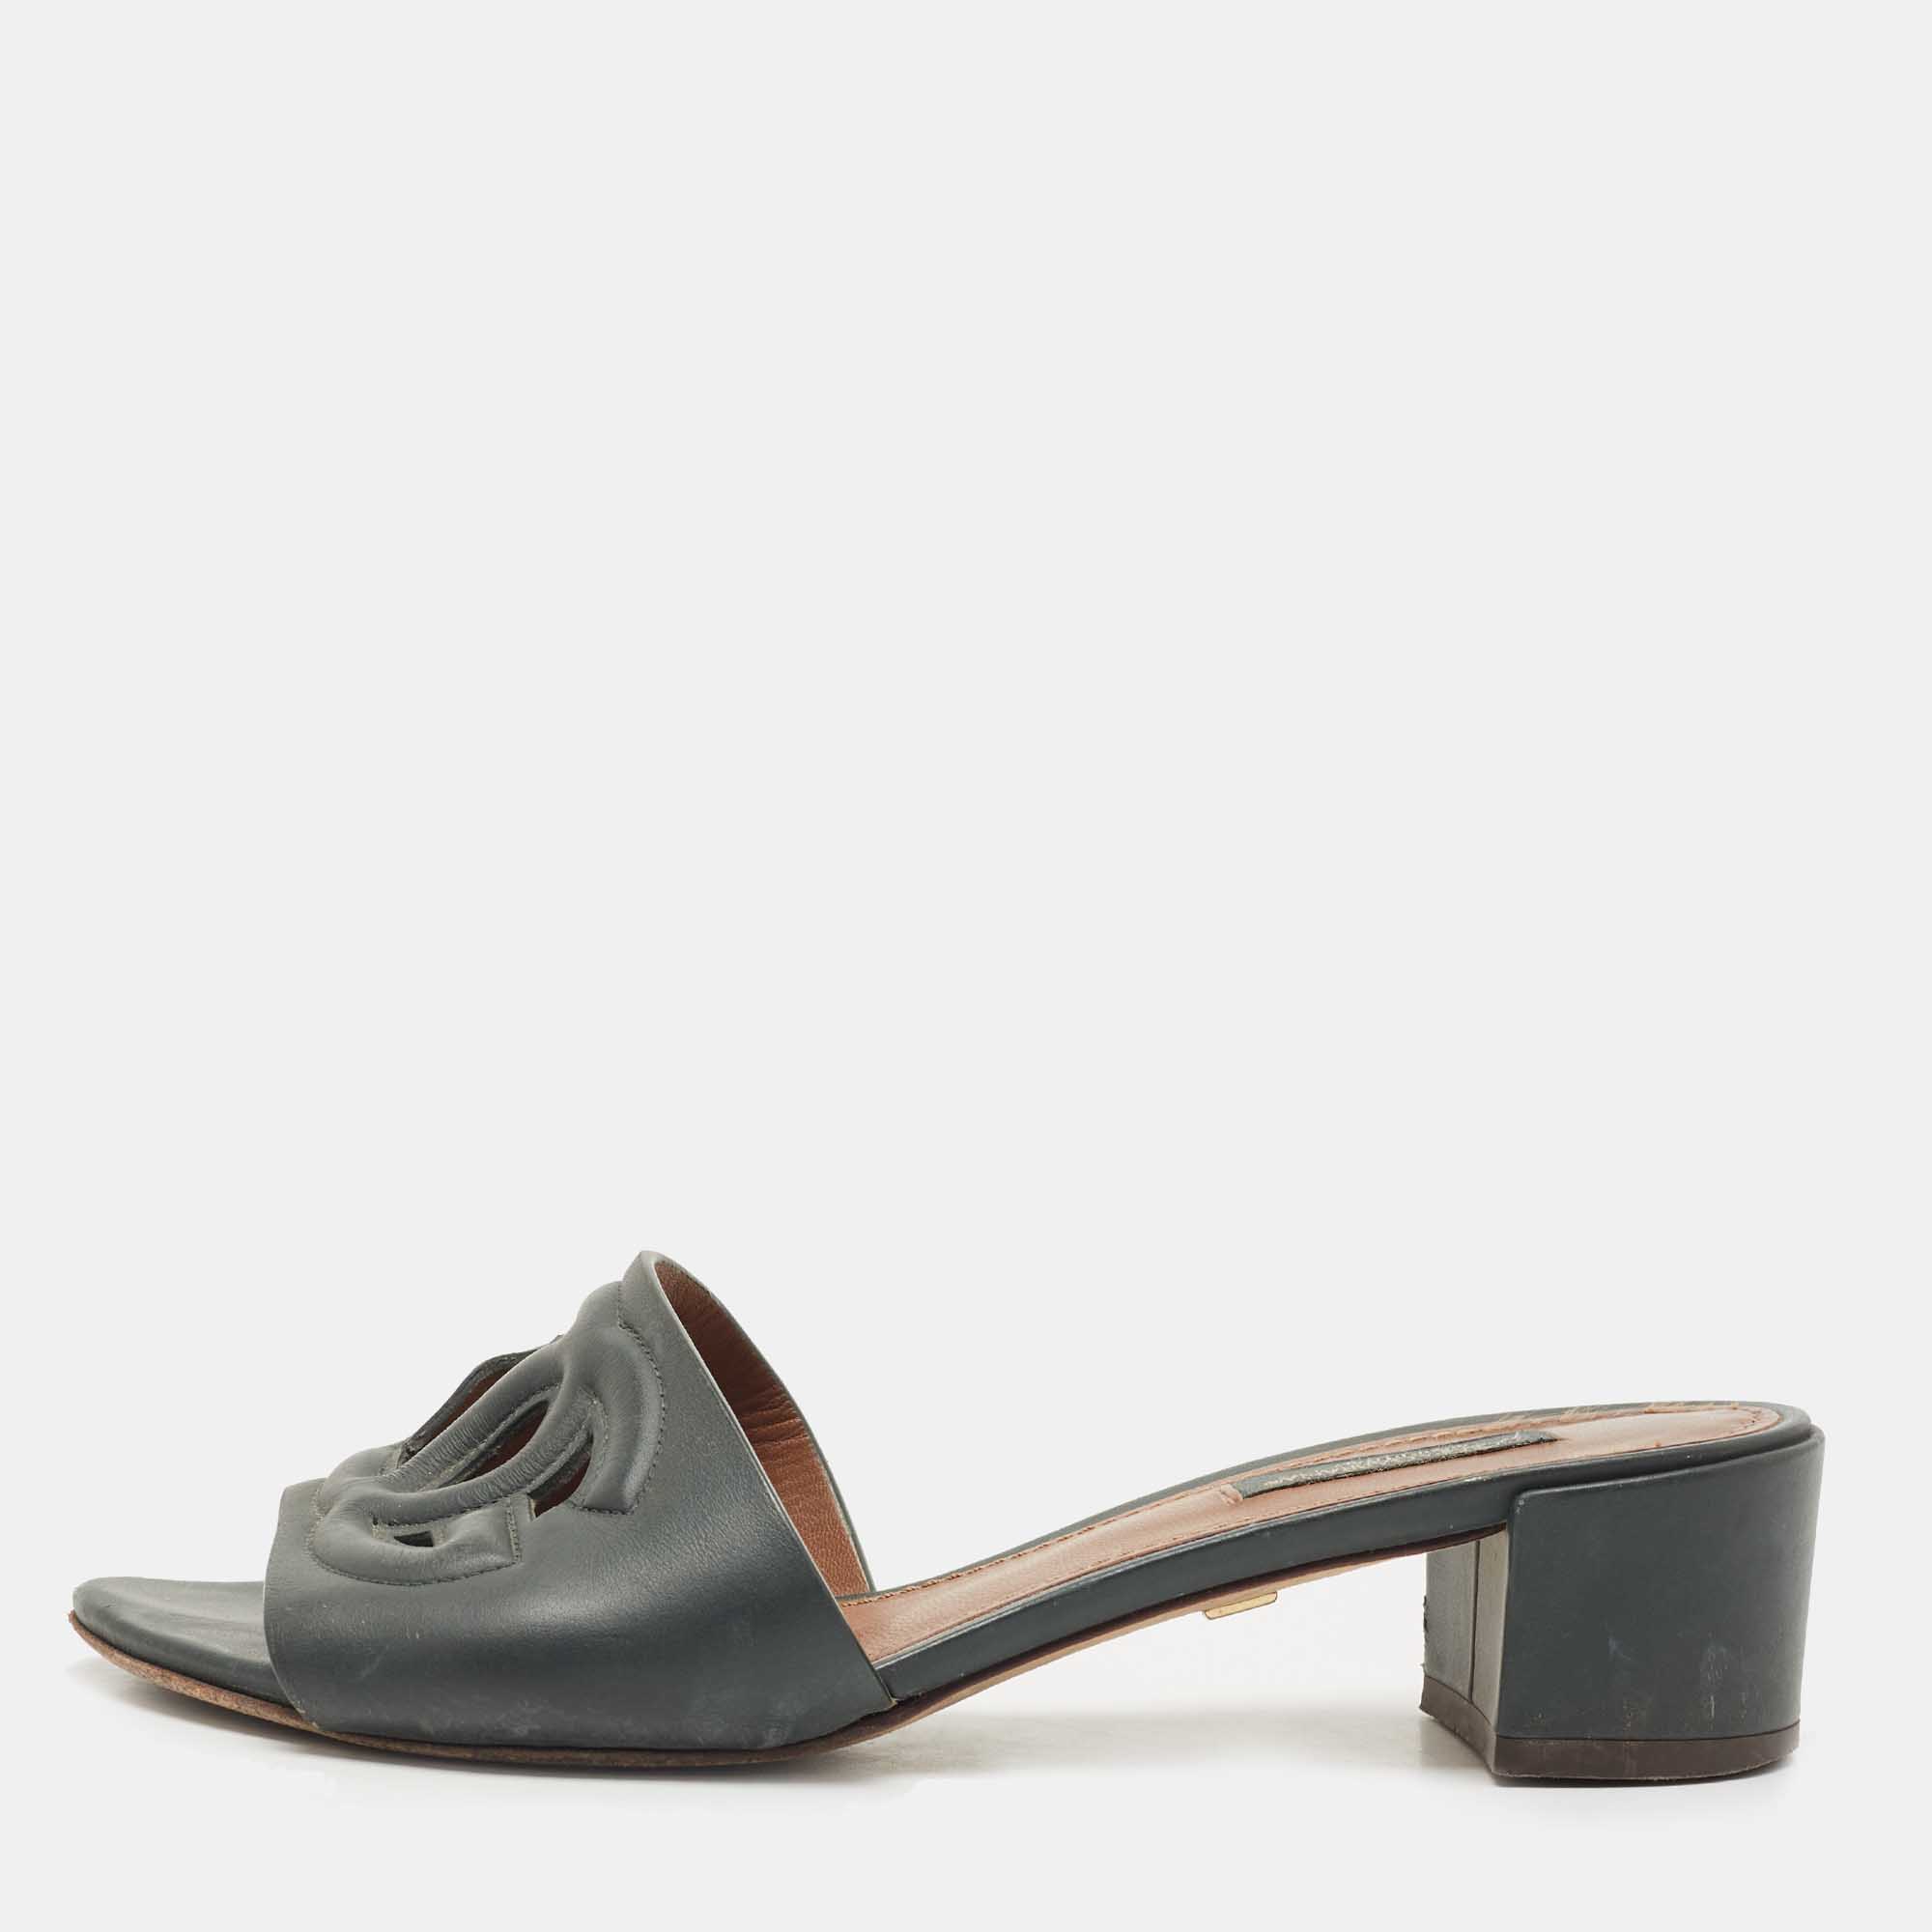 Dolce & Gabbana Dark Green Leather DG Cut Out Slide Sandals Size 36